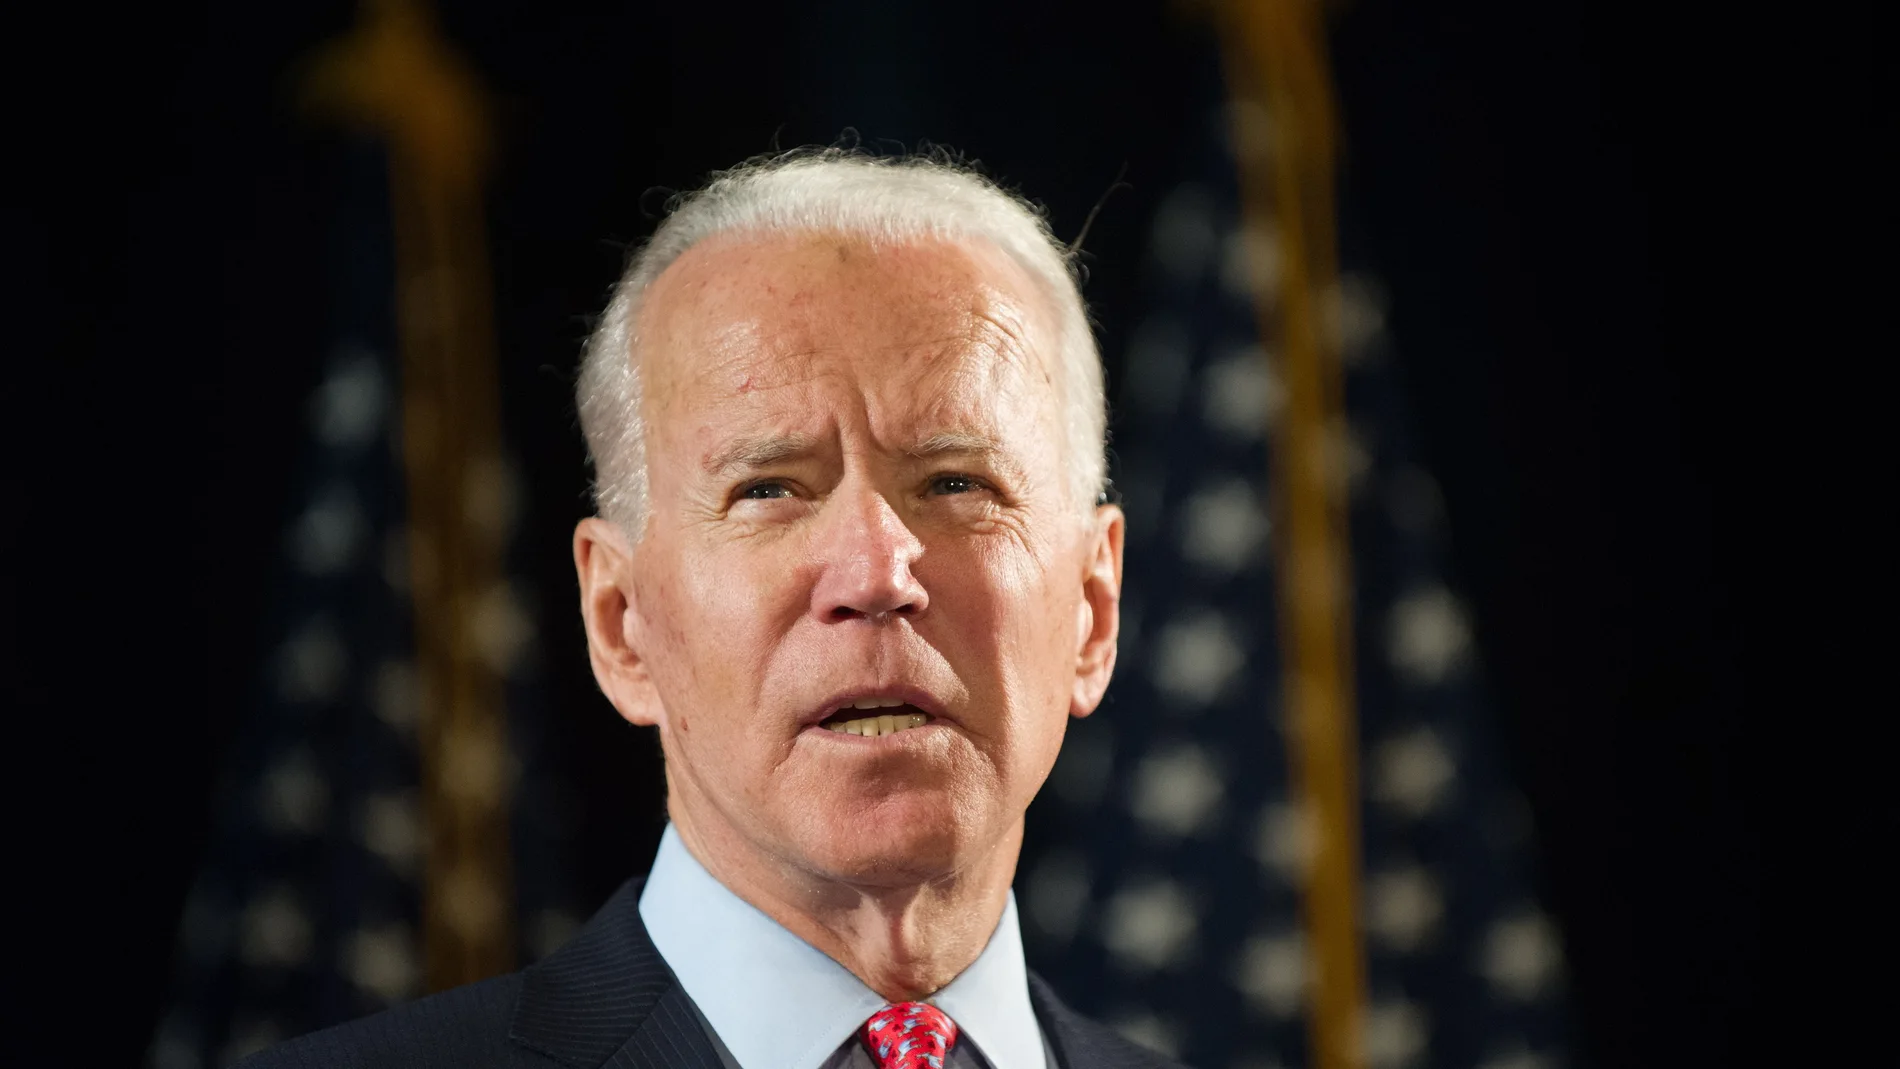 Joe Biden denies sexual abuse claims